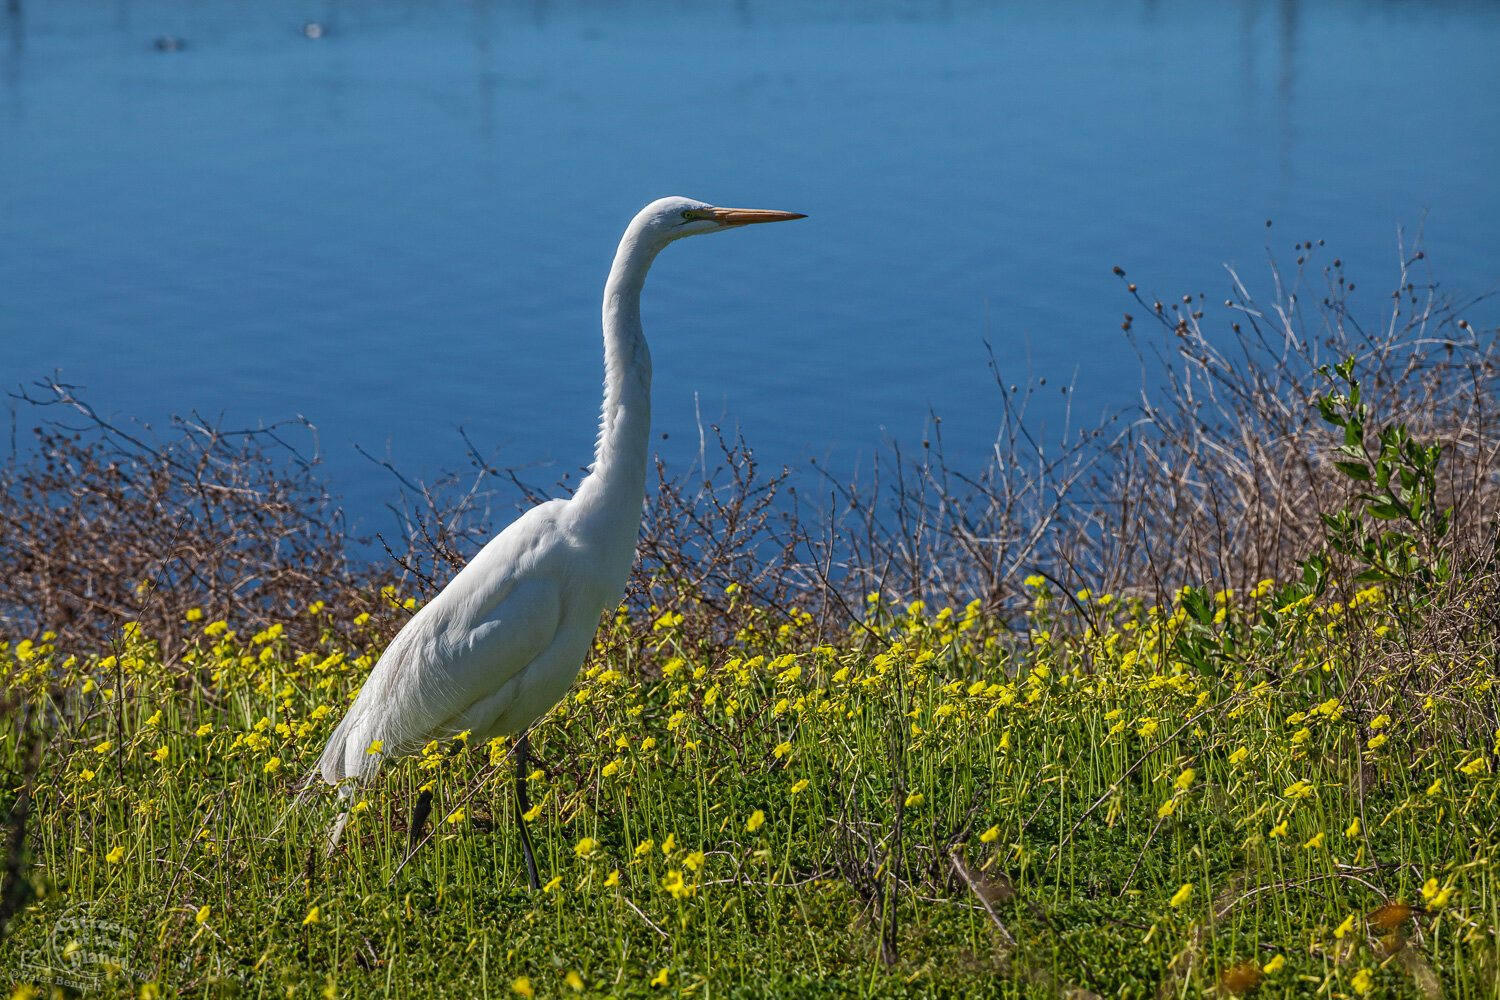  Great Egret in Bolsa Chica Ecological Reserve, Orange County, California, USA 